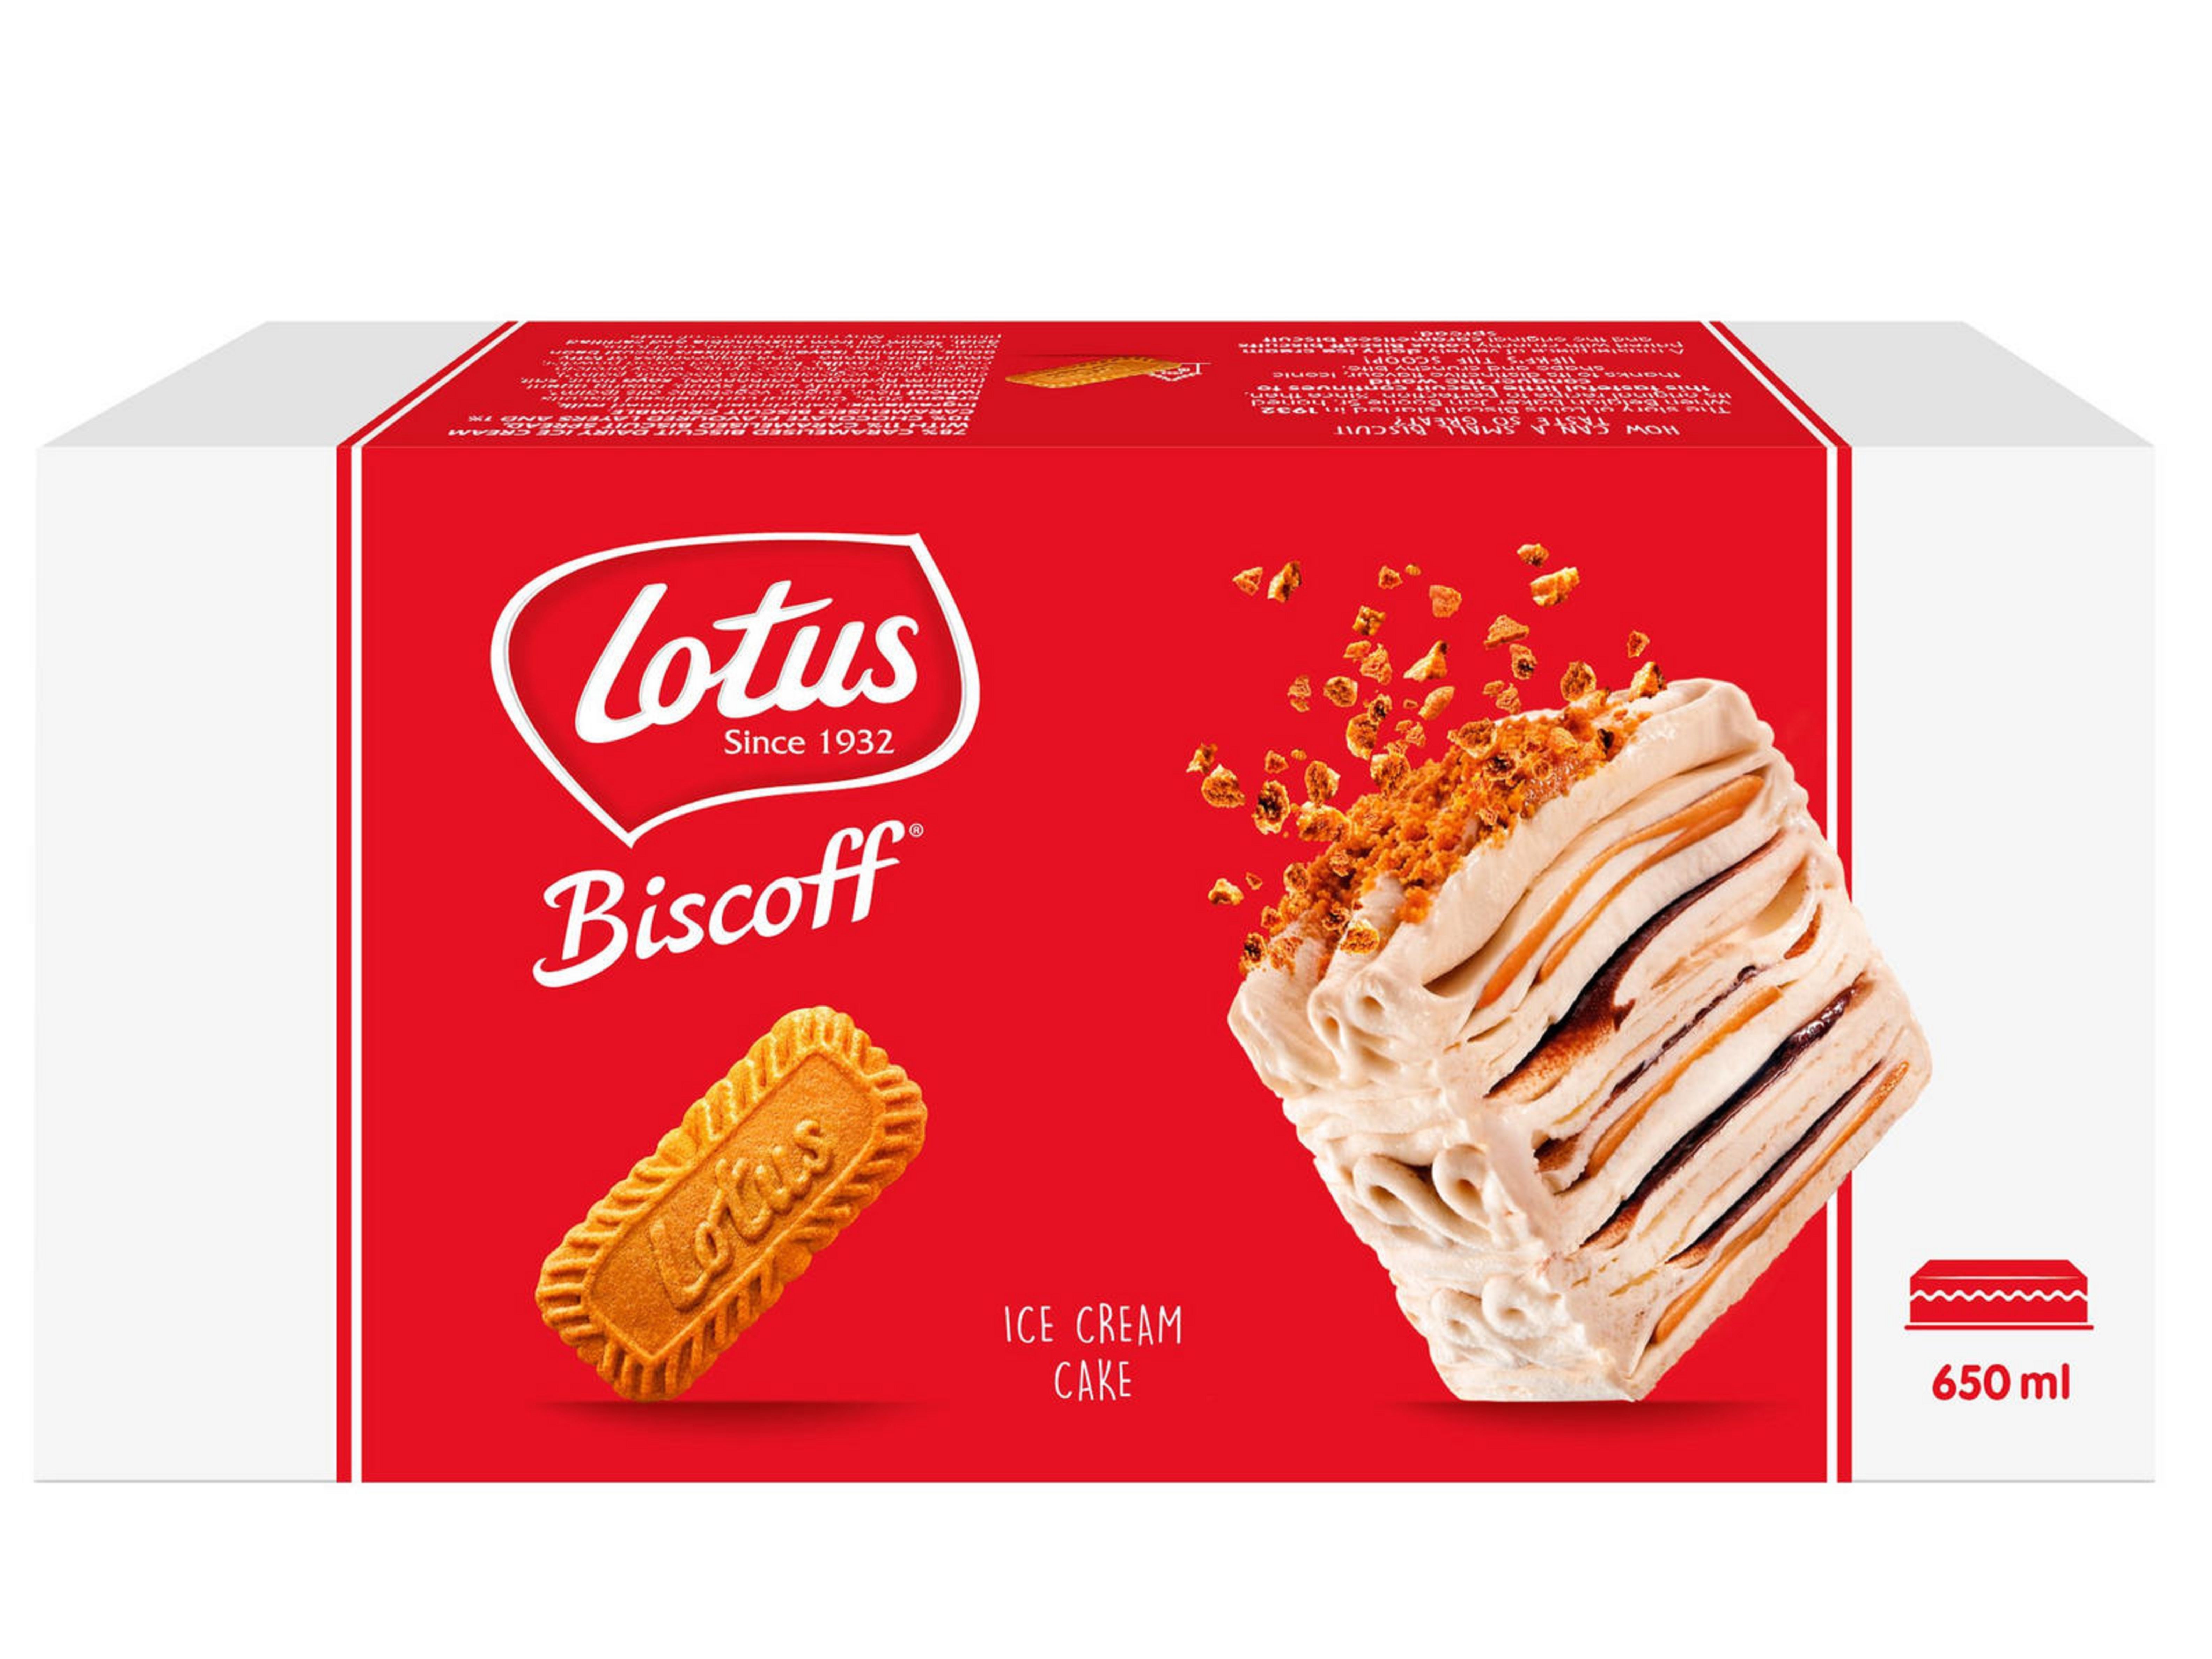 Iceland’s Lotus Biscoff ice cream cake